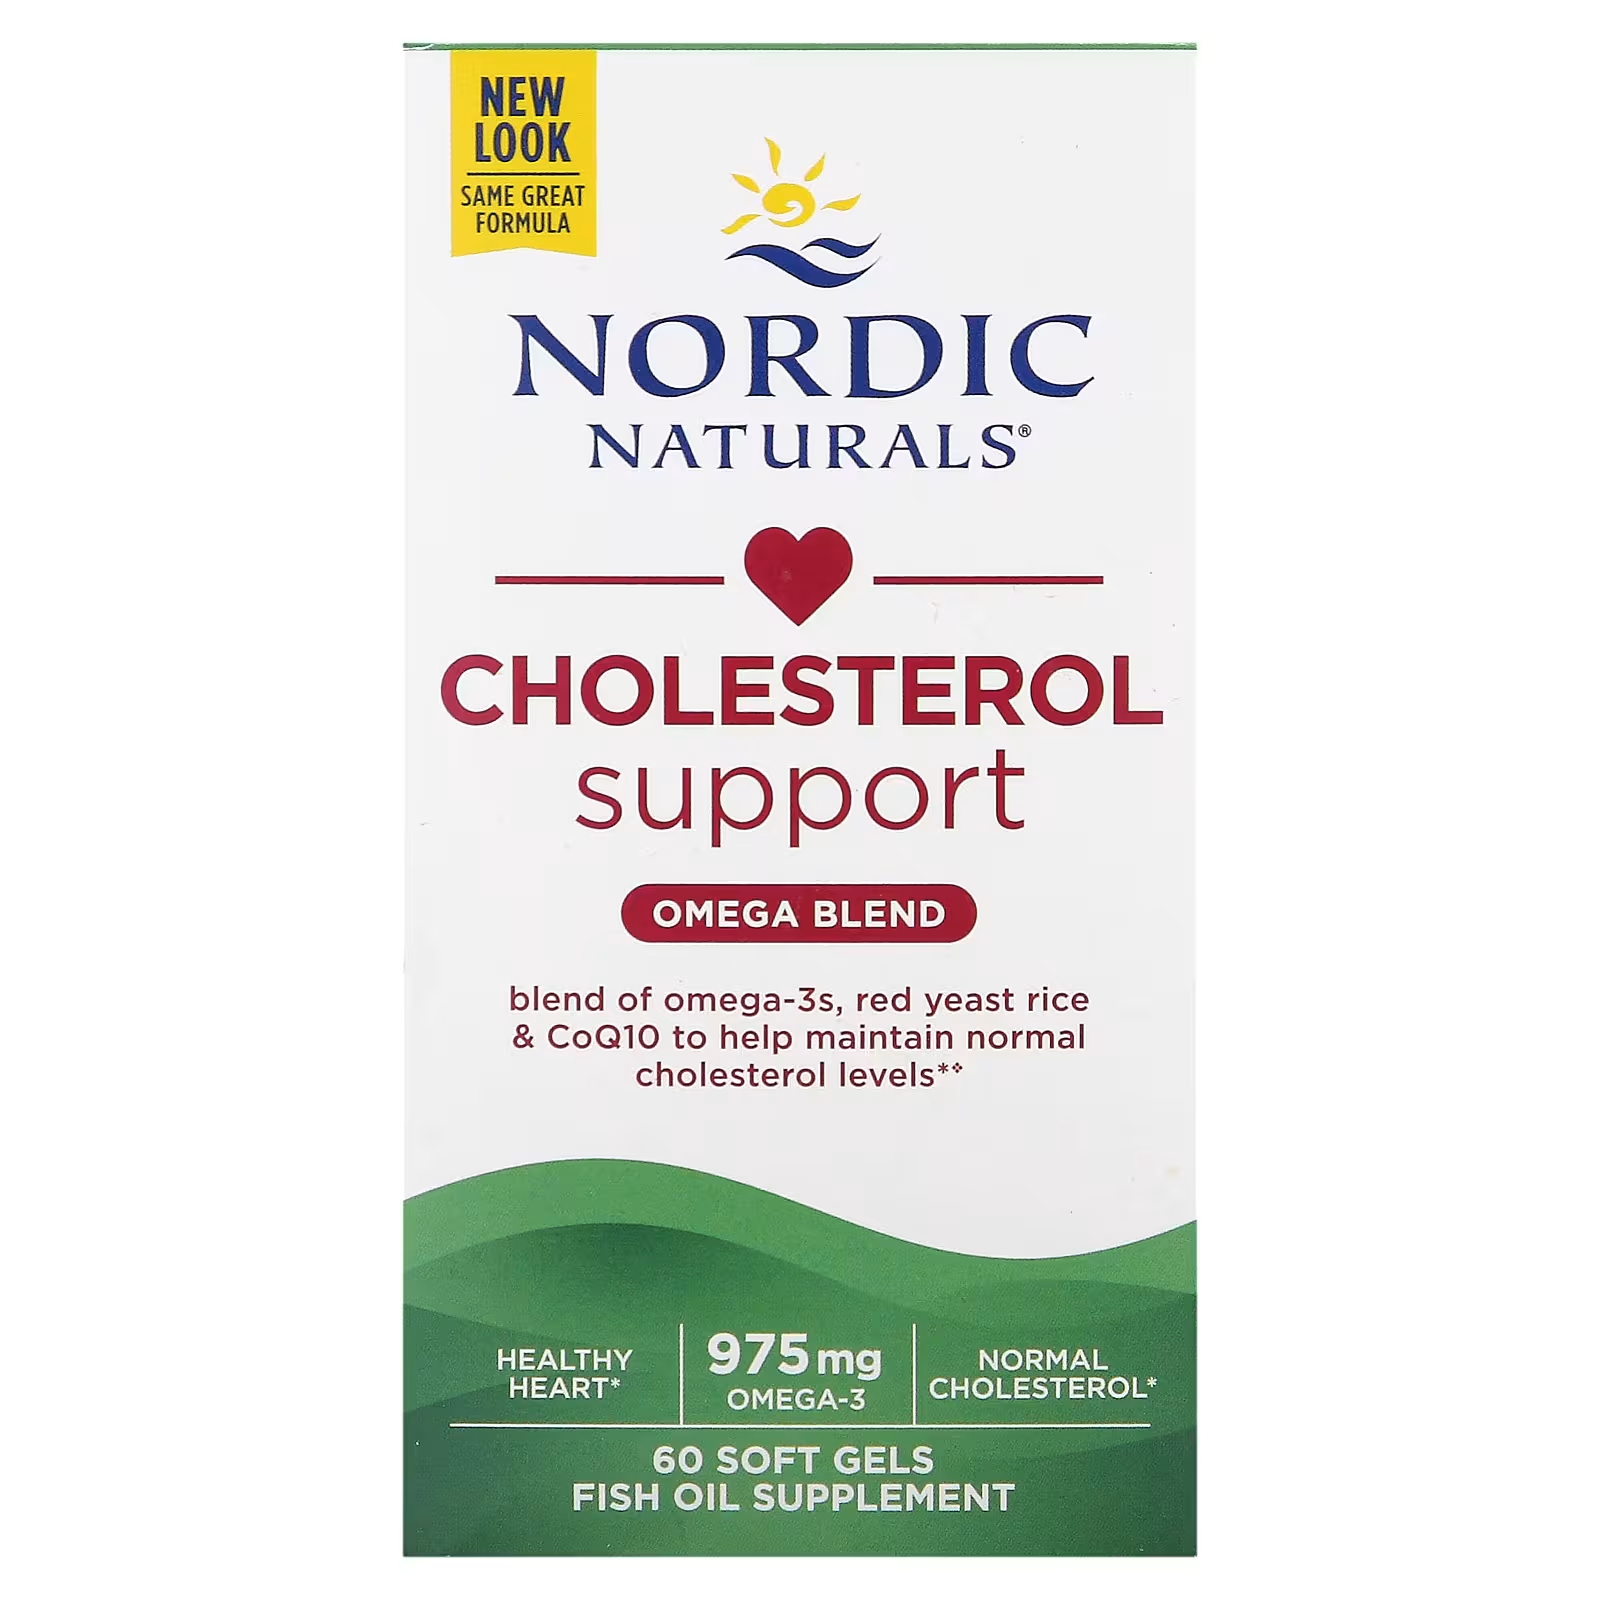 Nordic Naturals Поддержка холестерина Omega Blend 975 мг, 60 мягких гелей (325 мг на мягкую гель) nordic naturals omega focus 1280 мг 60 мягких таблеток 640 мг на мягкую гель